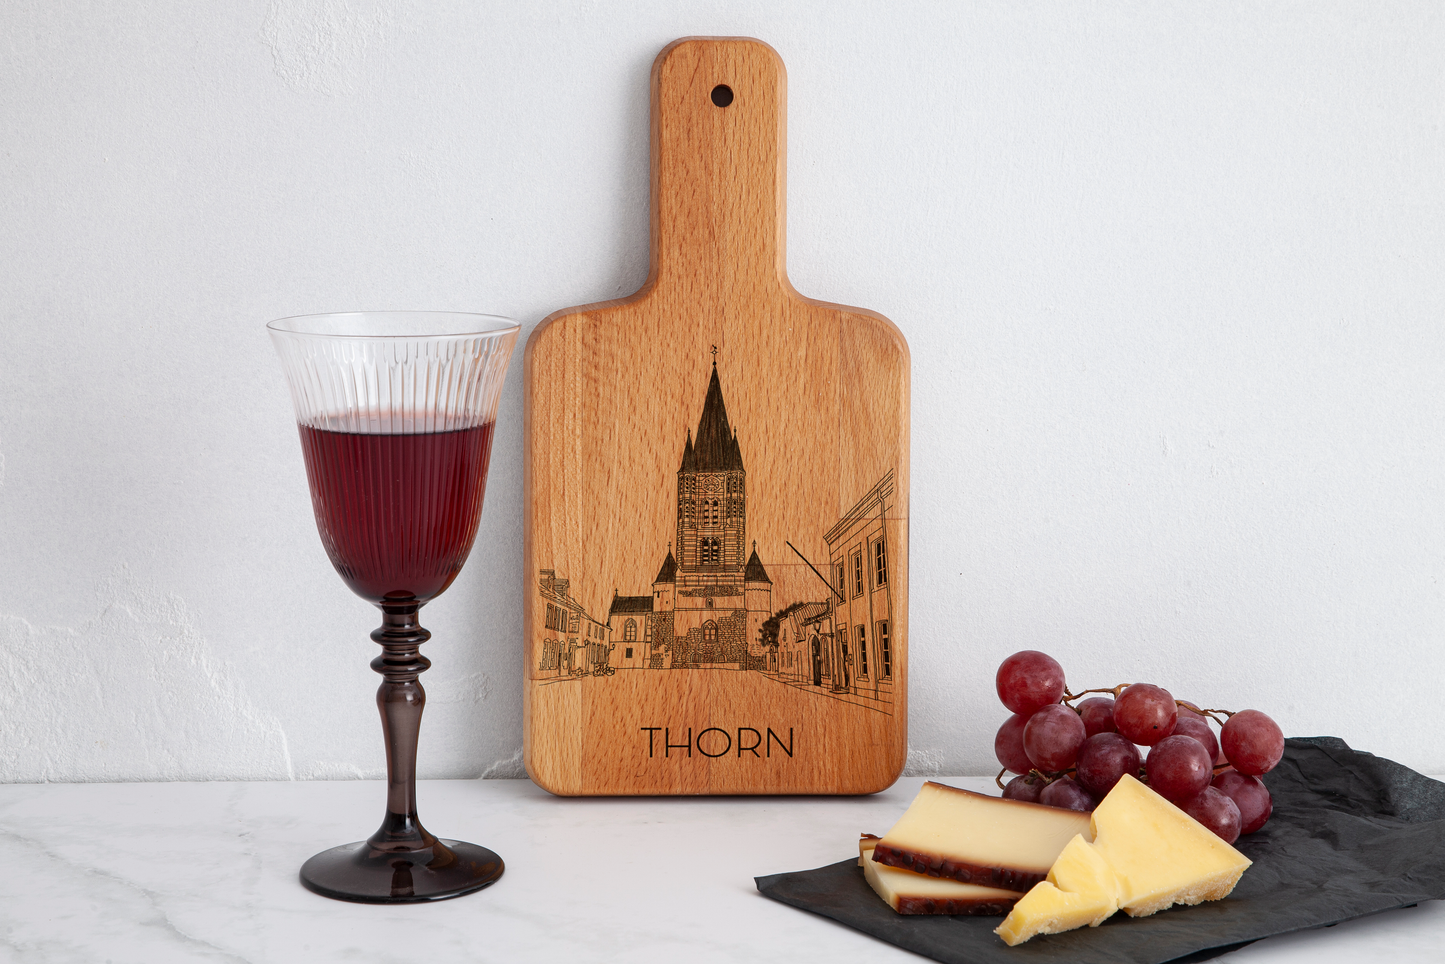 Thorn, Abdij Kerk, cheese board, in kitchen